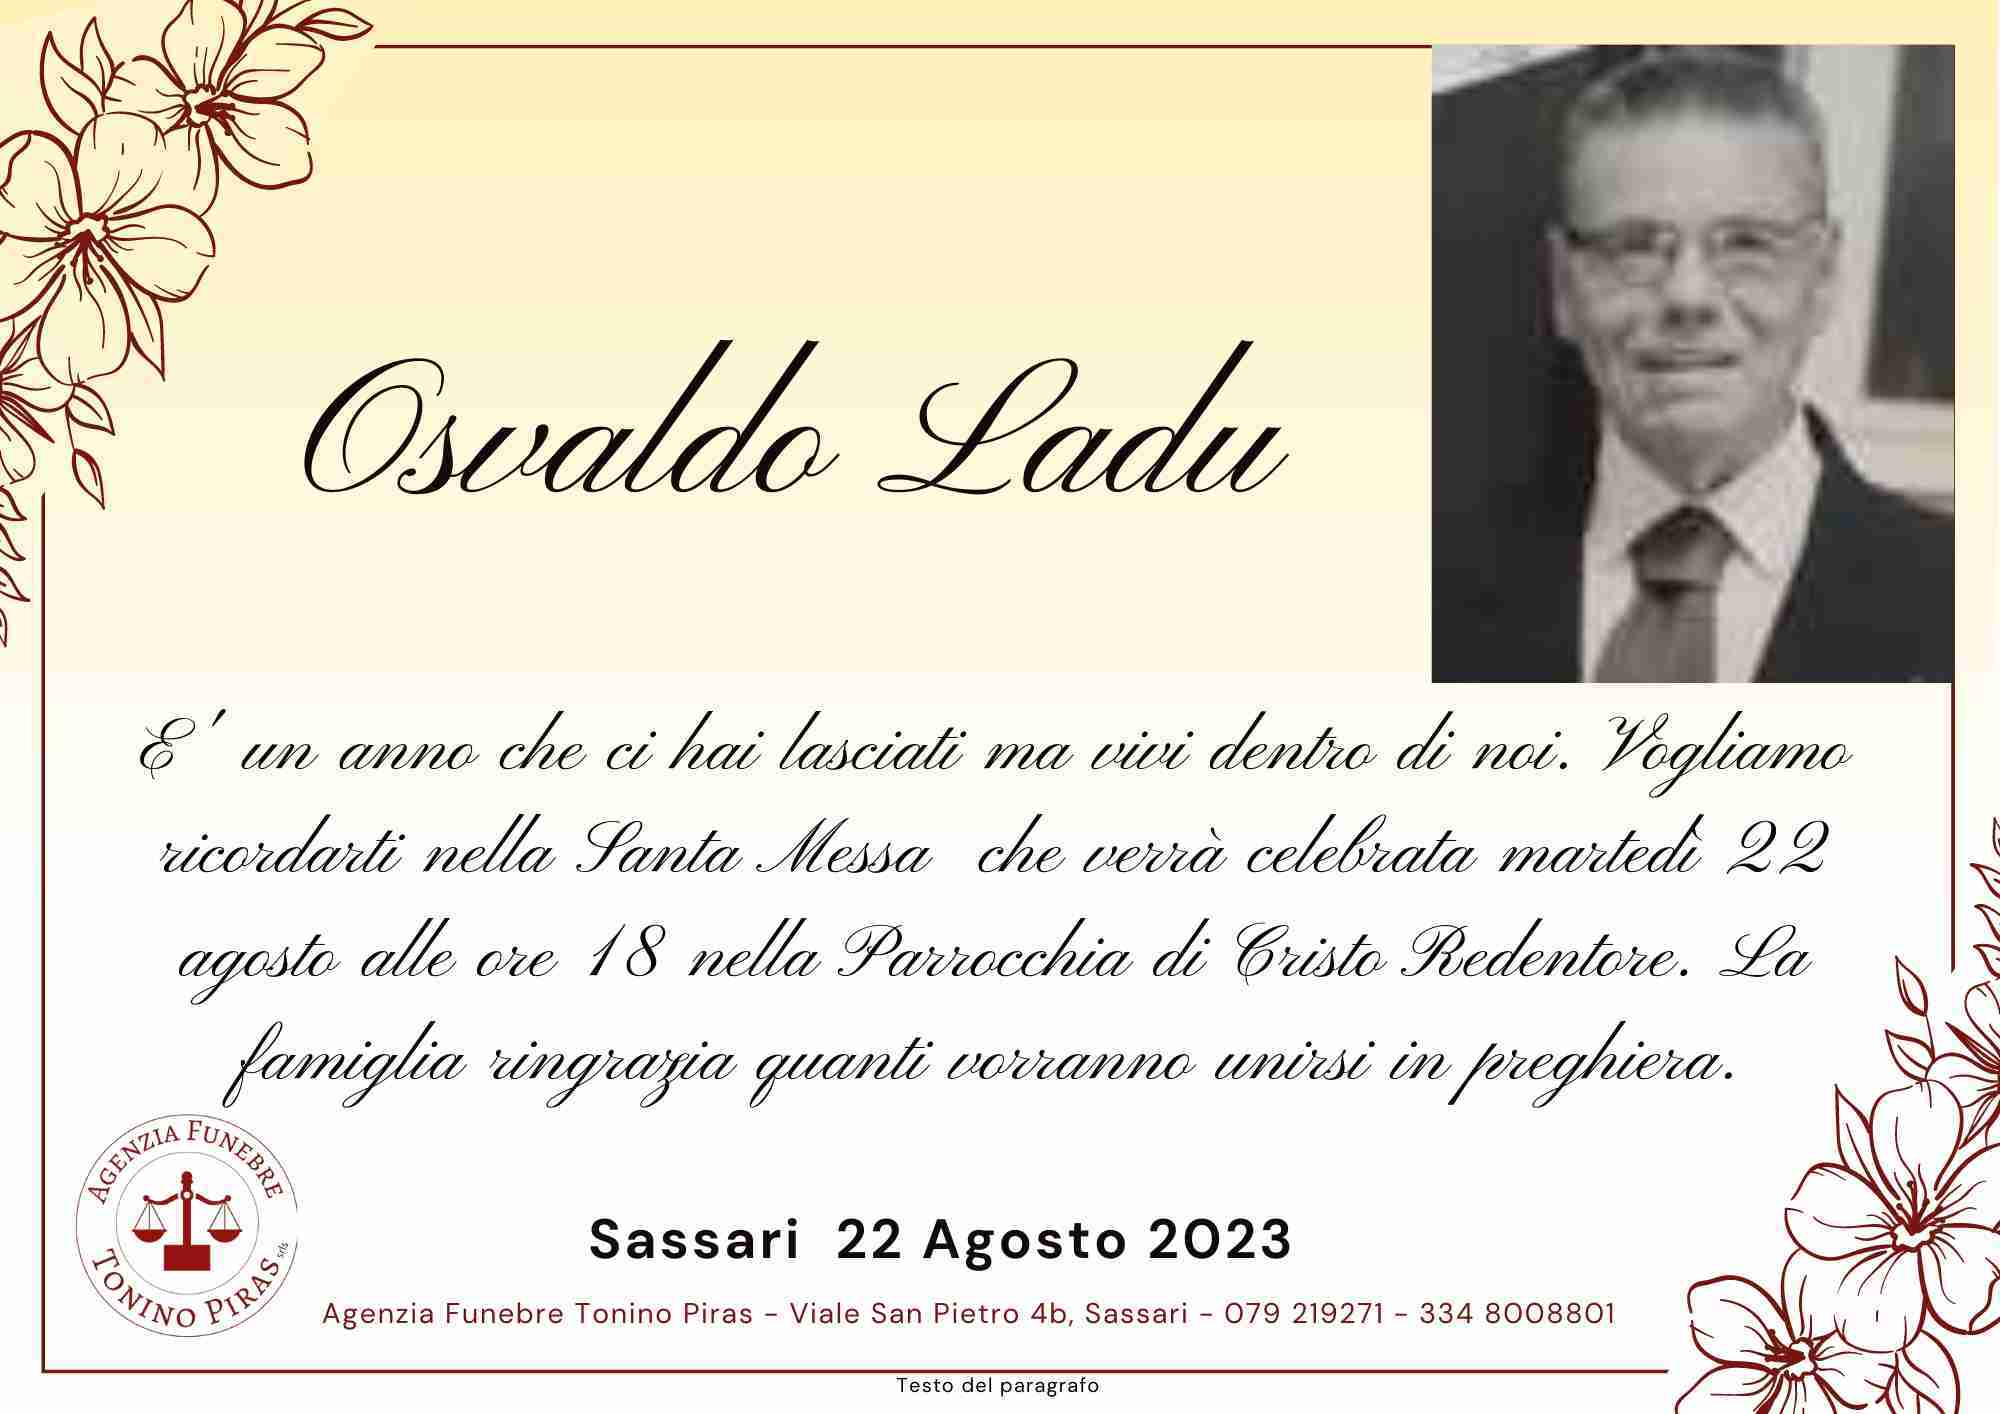 Osvaldo Ladu